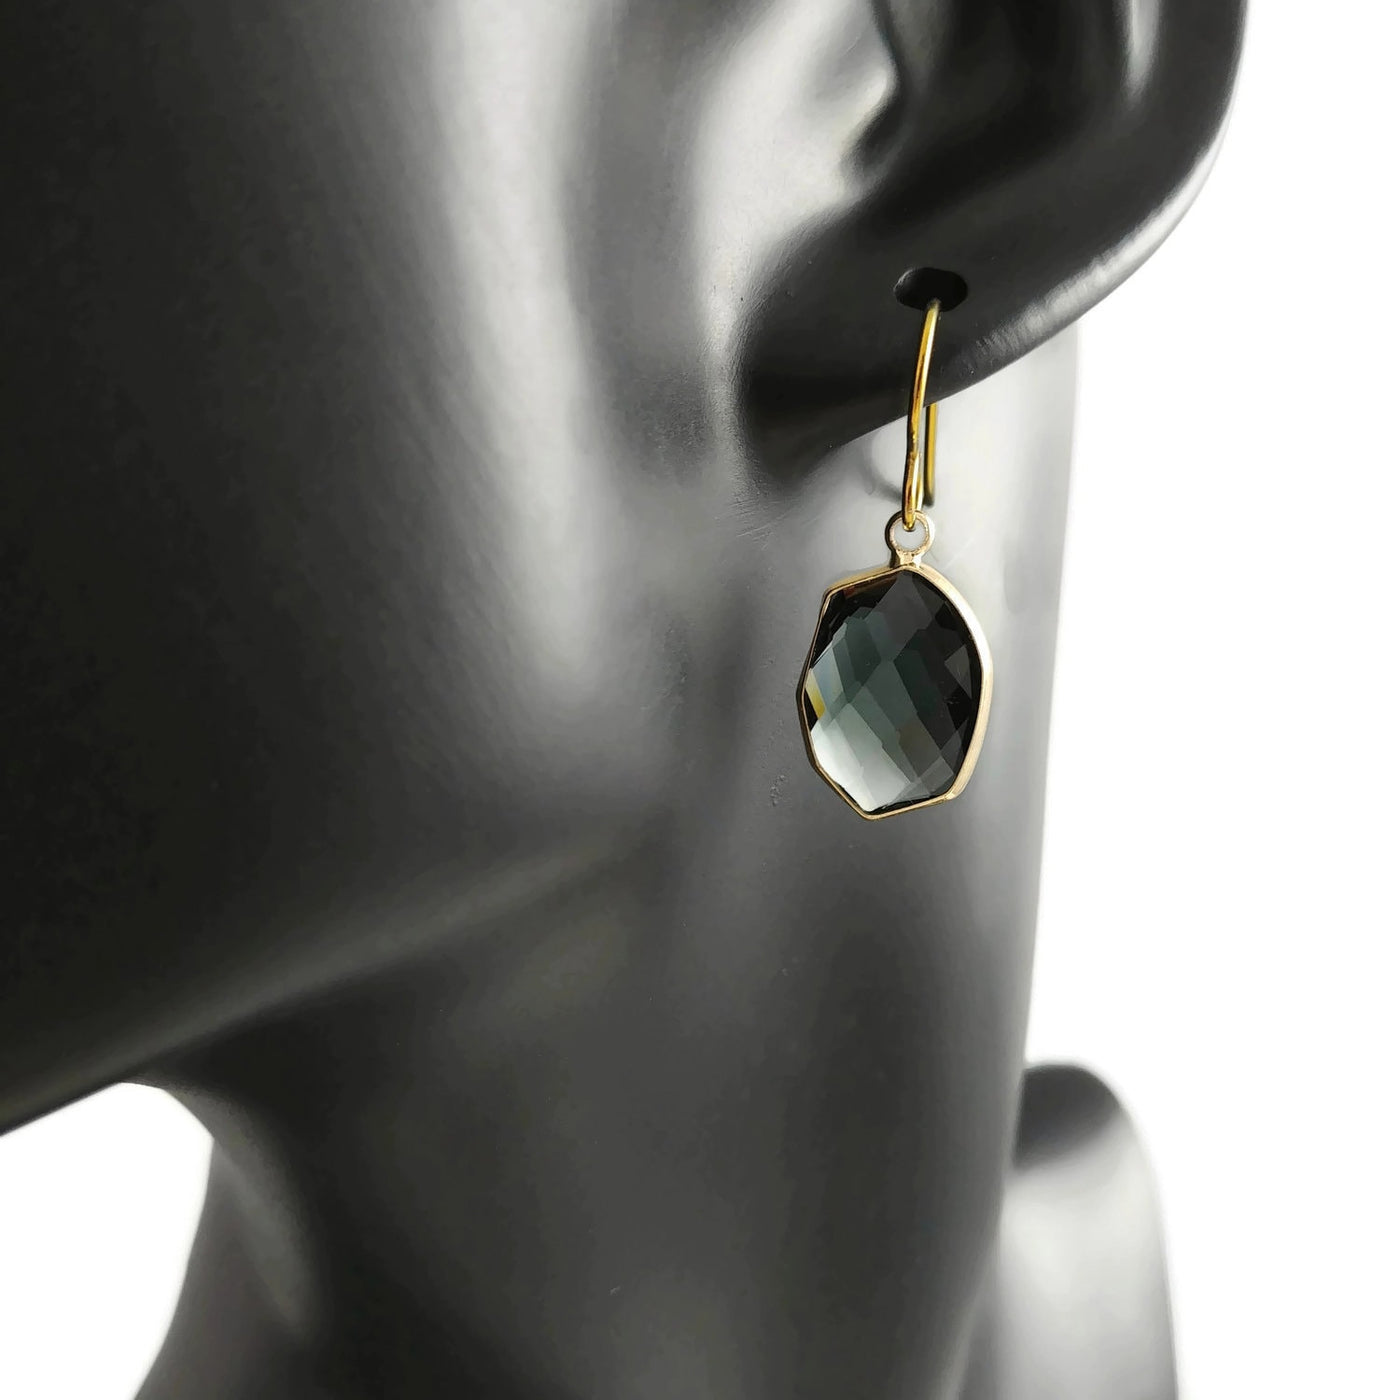 Black crystal dangle earrings, Gold wrapped crystal earrings, Faceted oval drop earrings, Nickel free jewelry